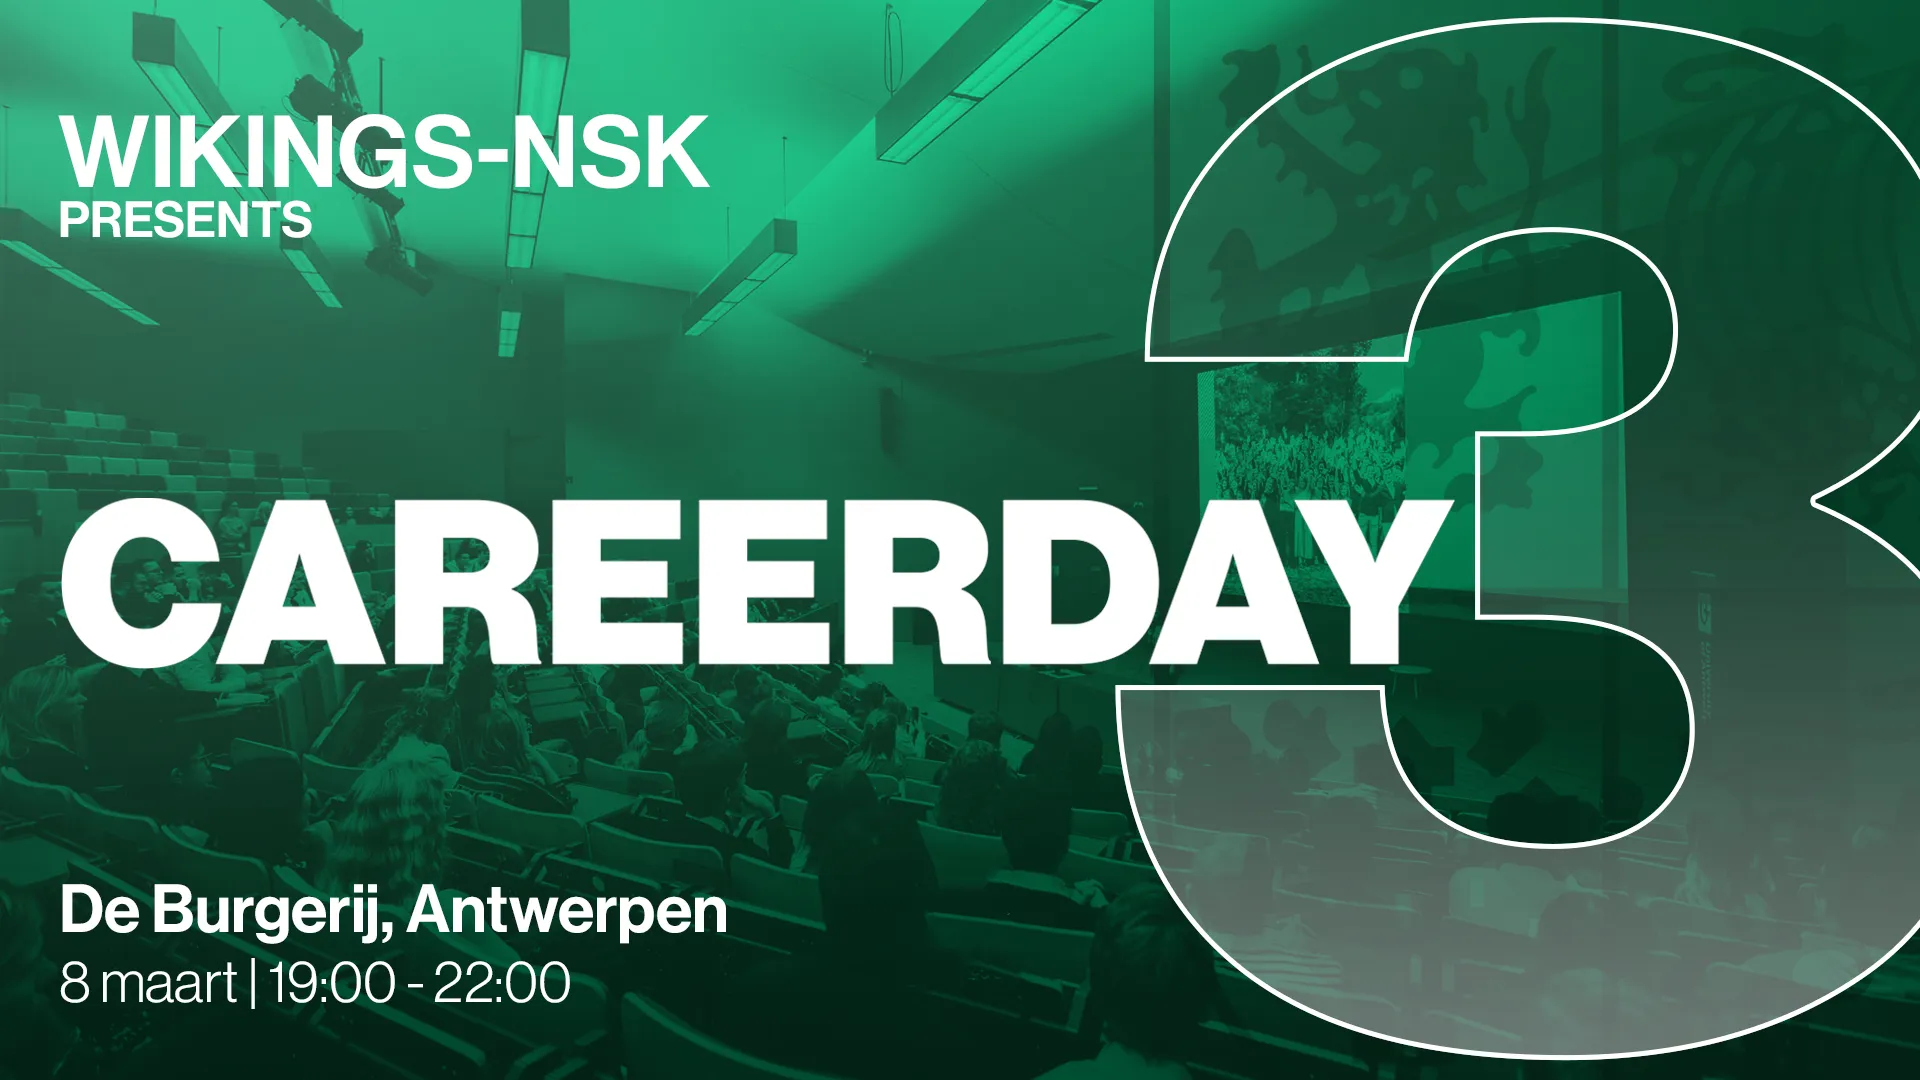 wikings-nsk-careerday-3